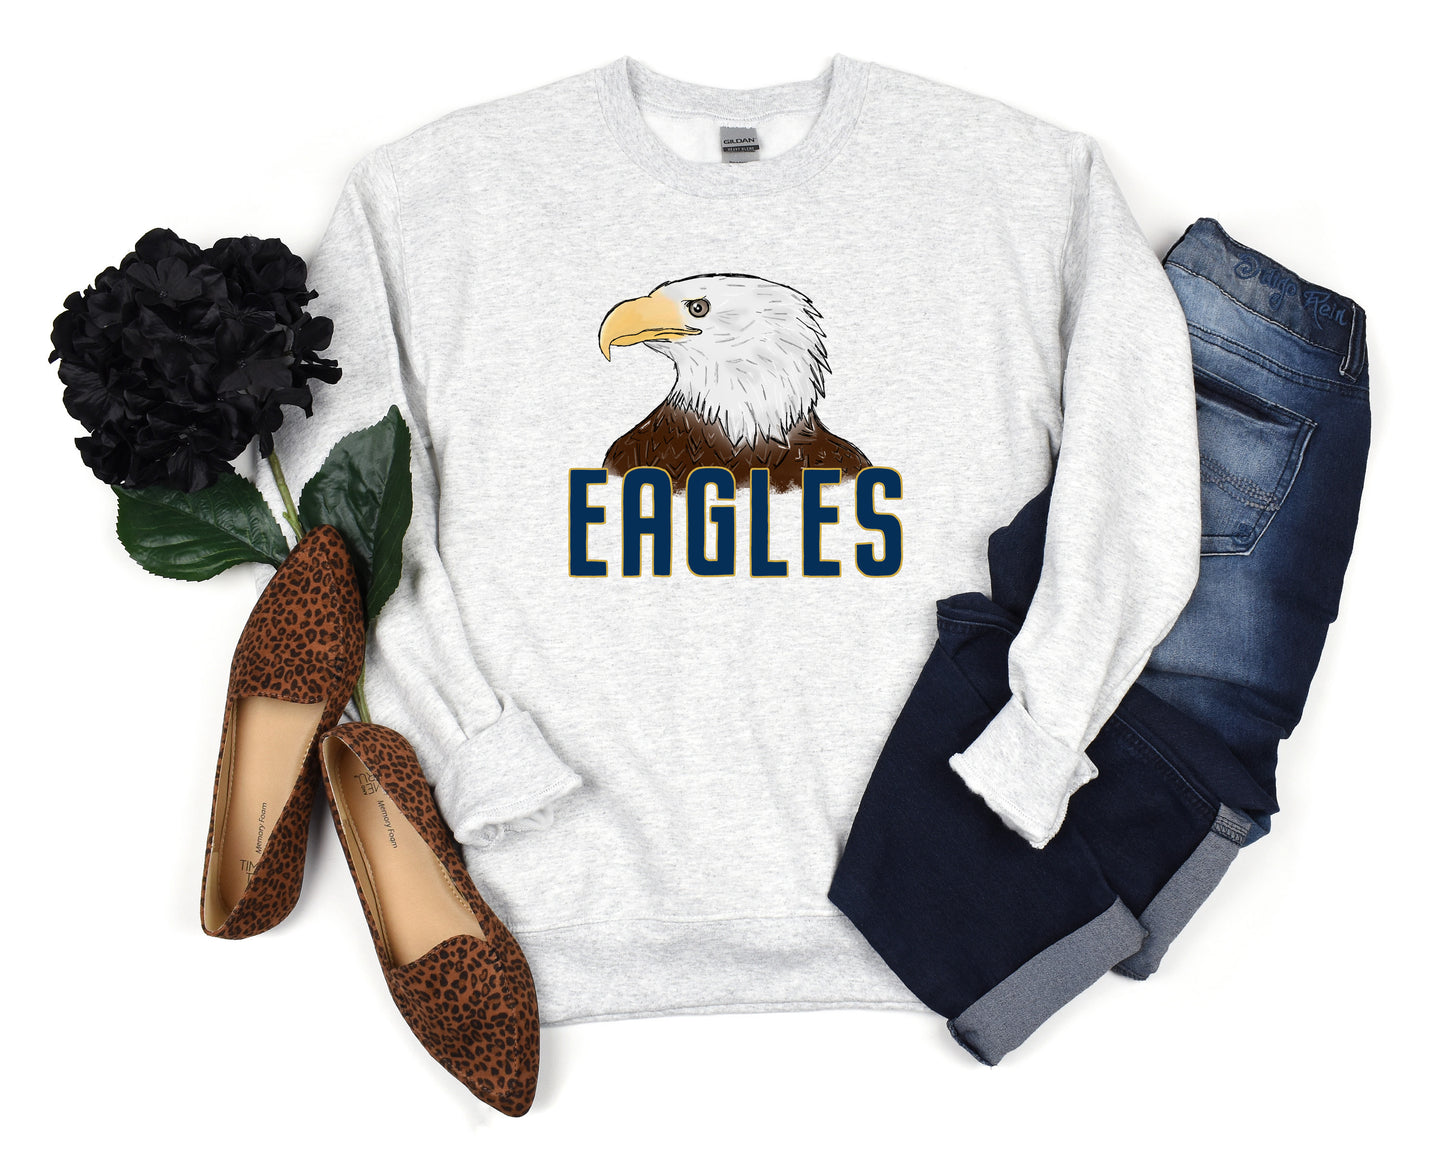 Eagles crewneck sweatshirt